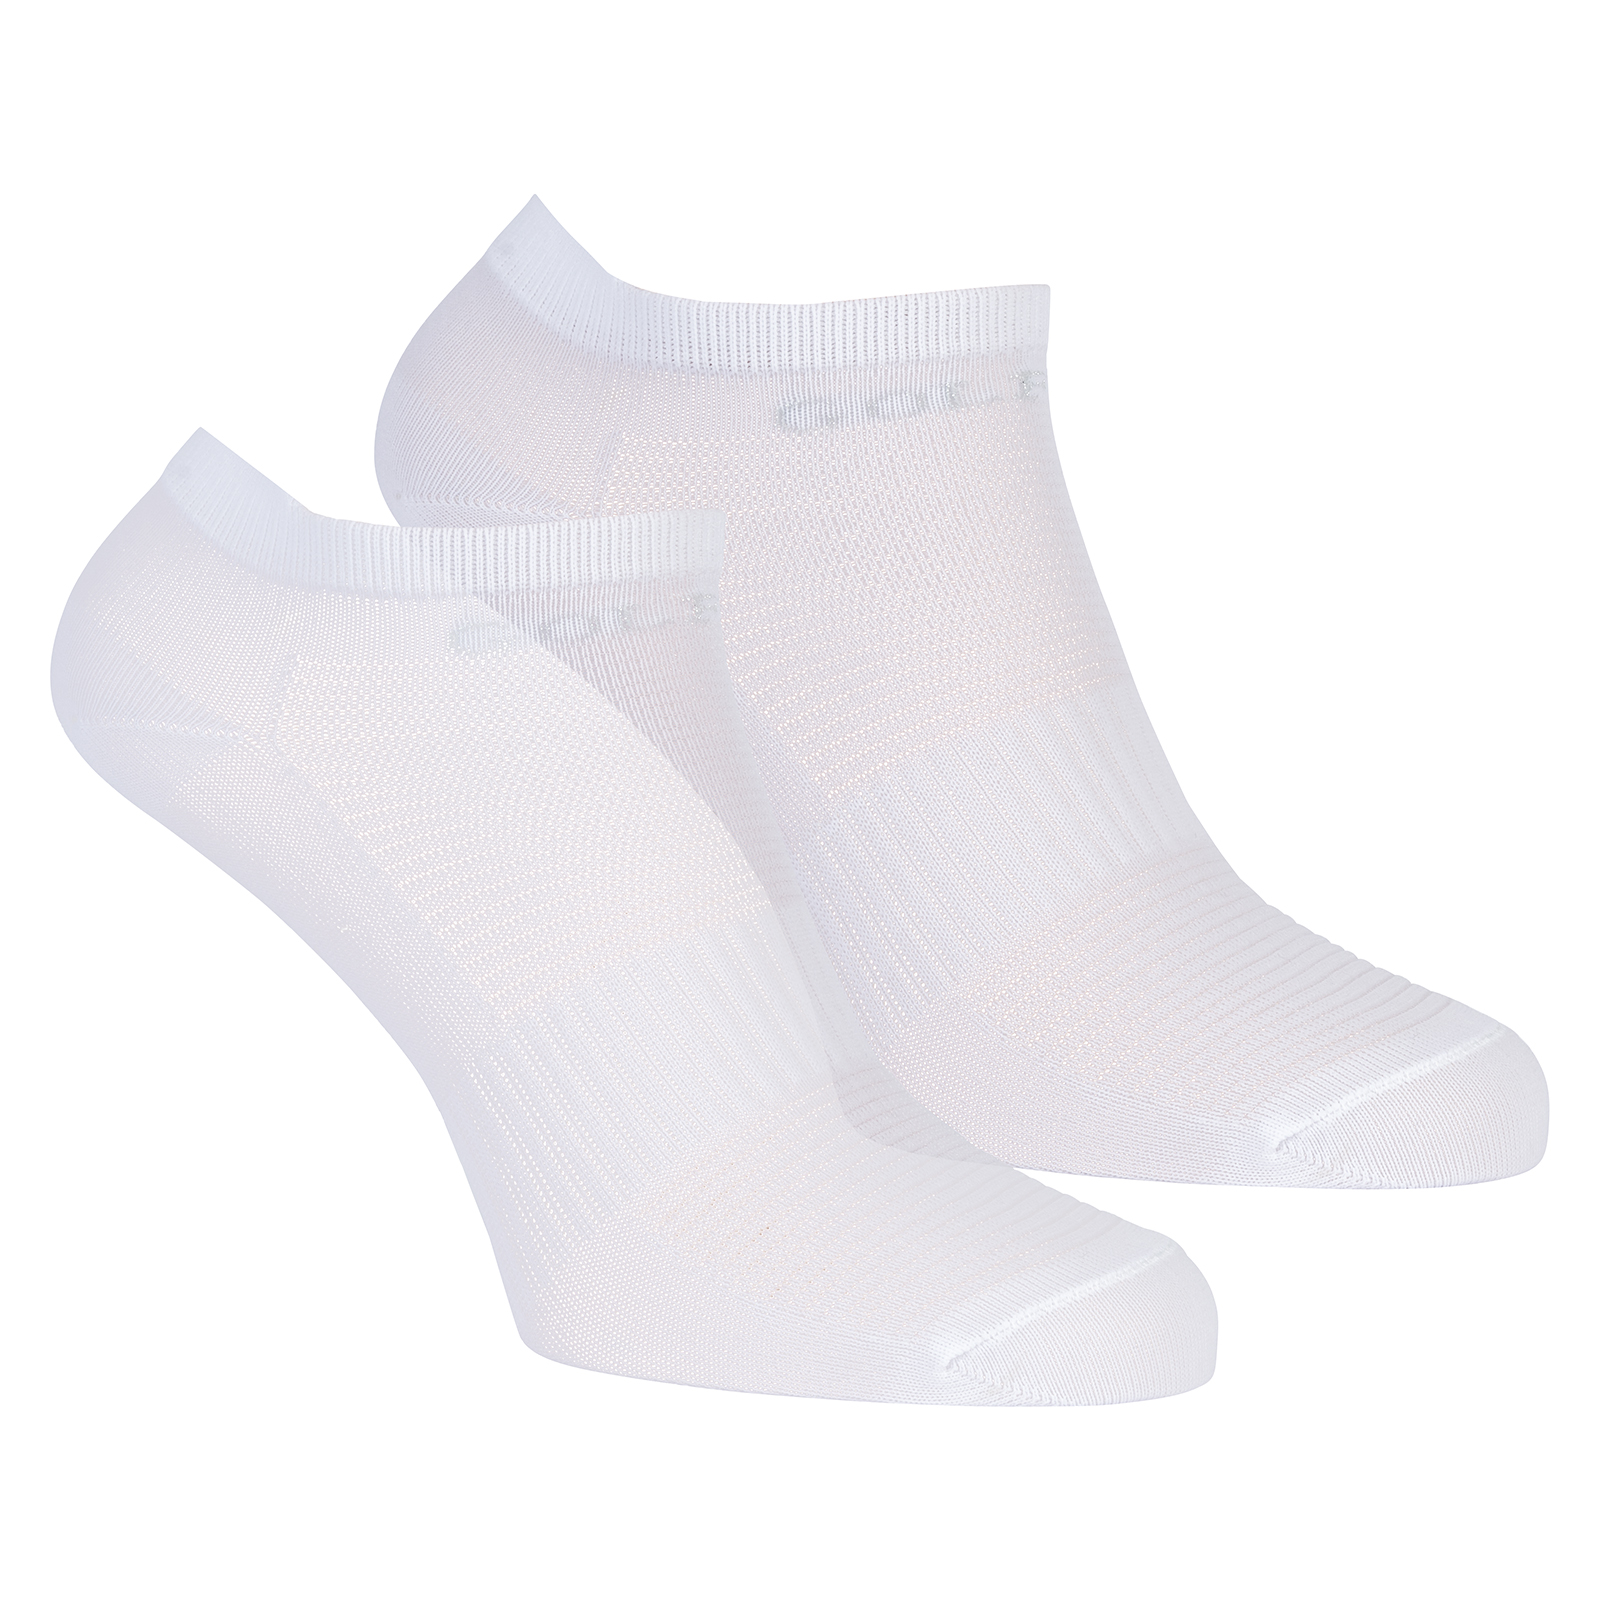 Ladies' golf socks made from moisture-regulating material